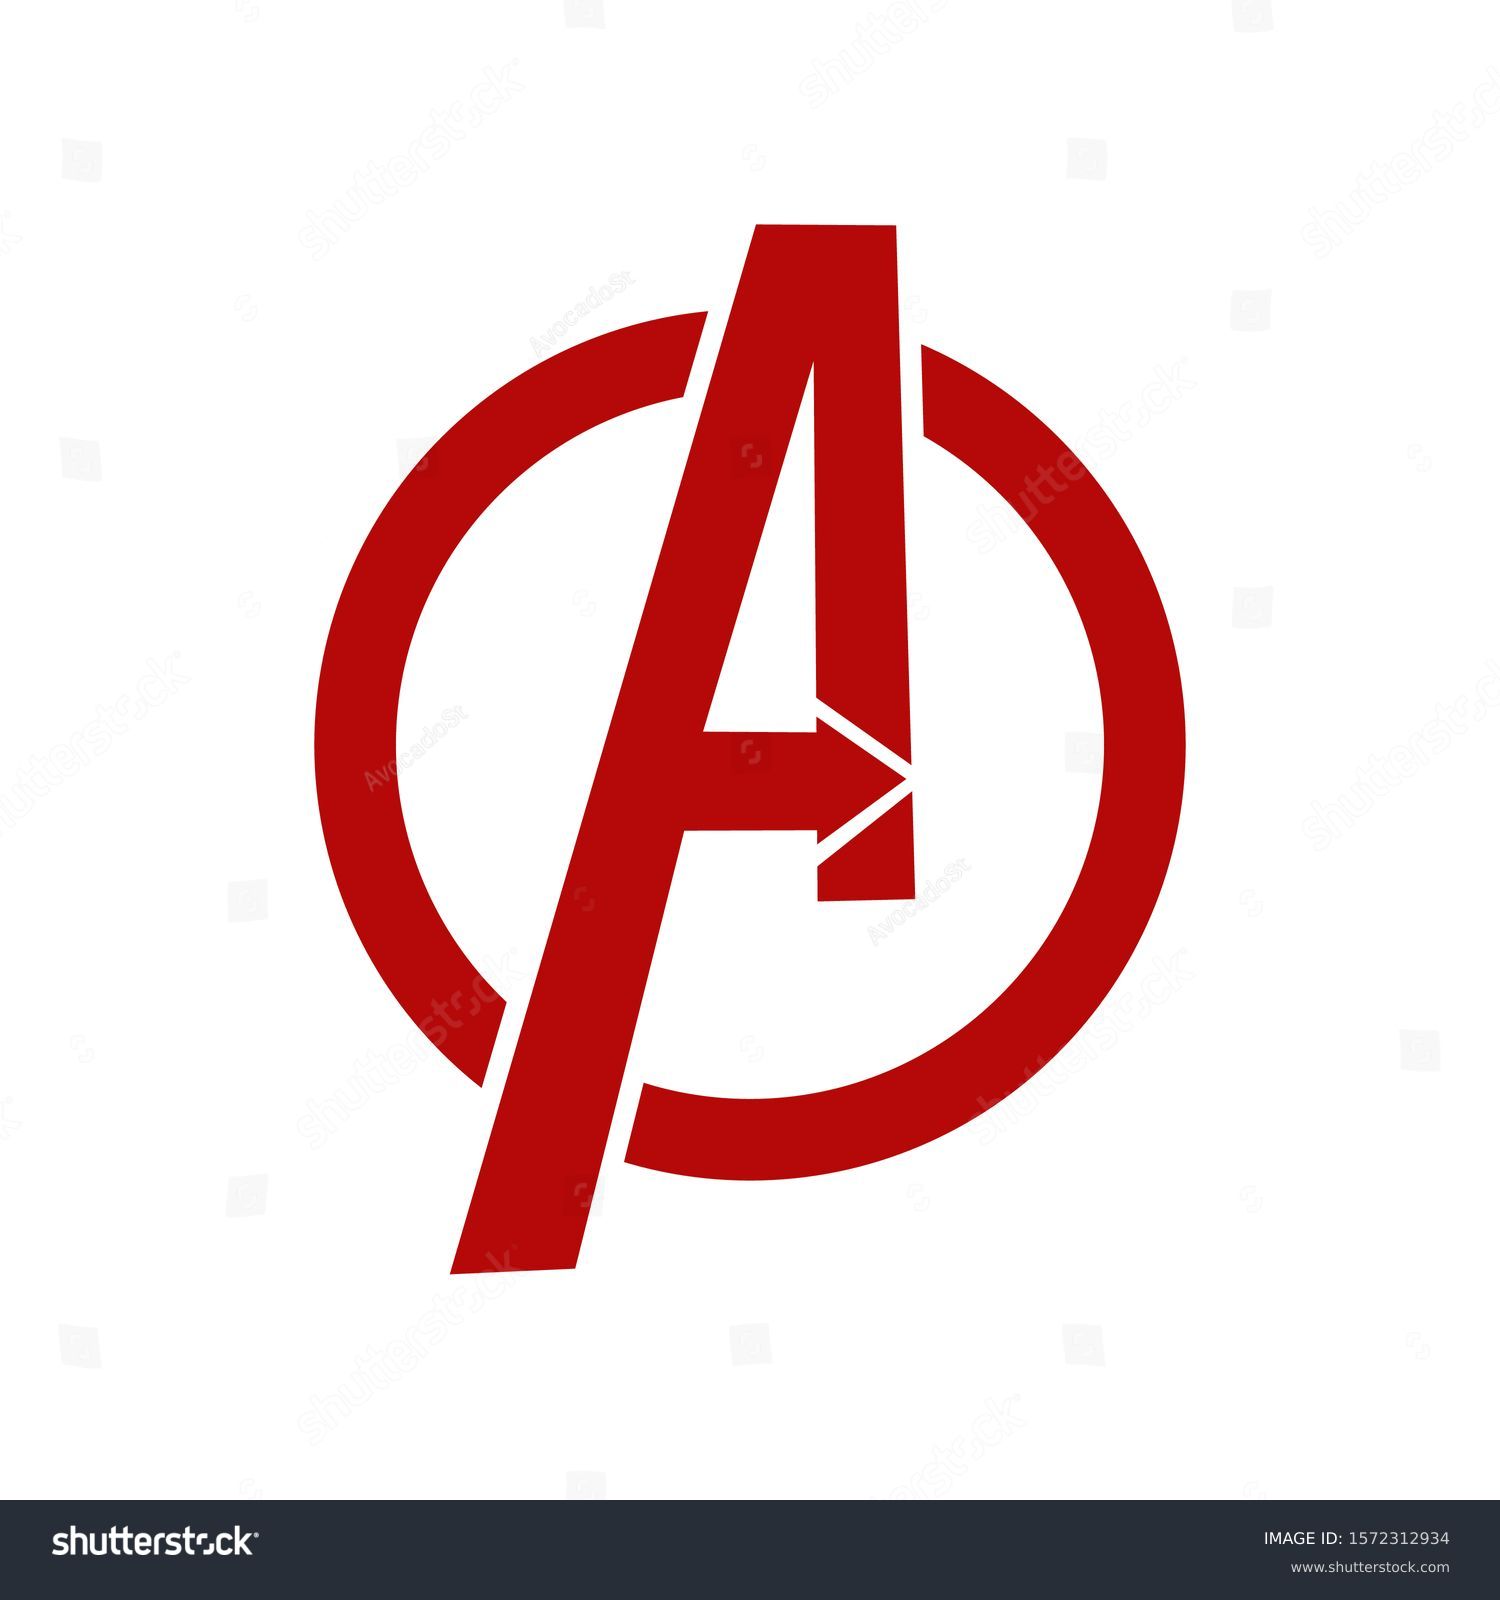 SVG of Super heroes logo placed on white background. Vector illustration. svg